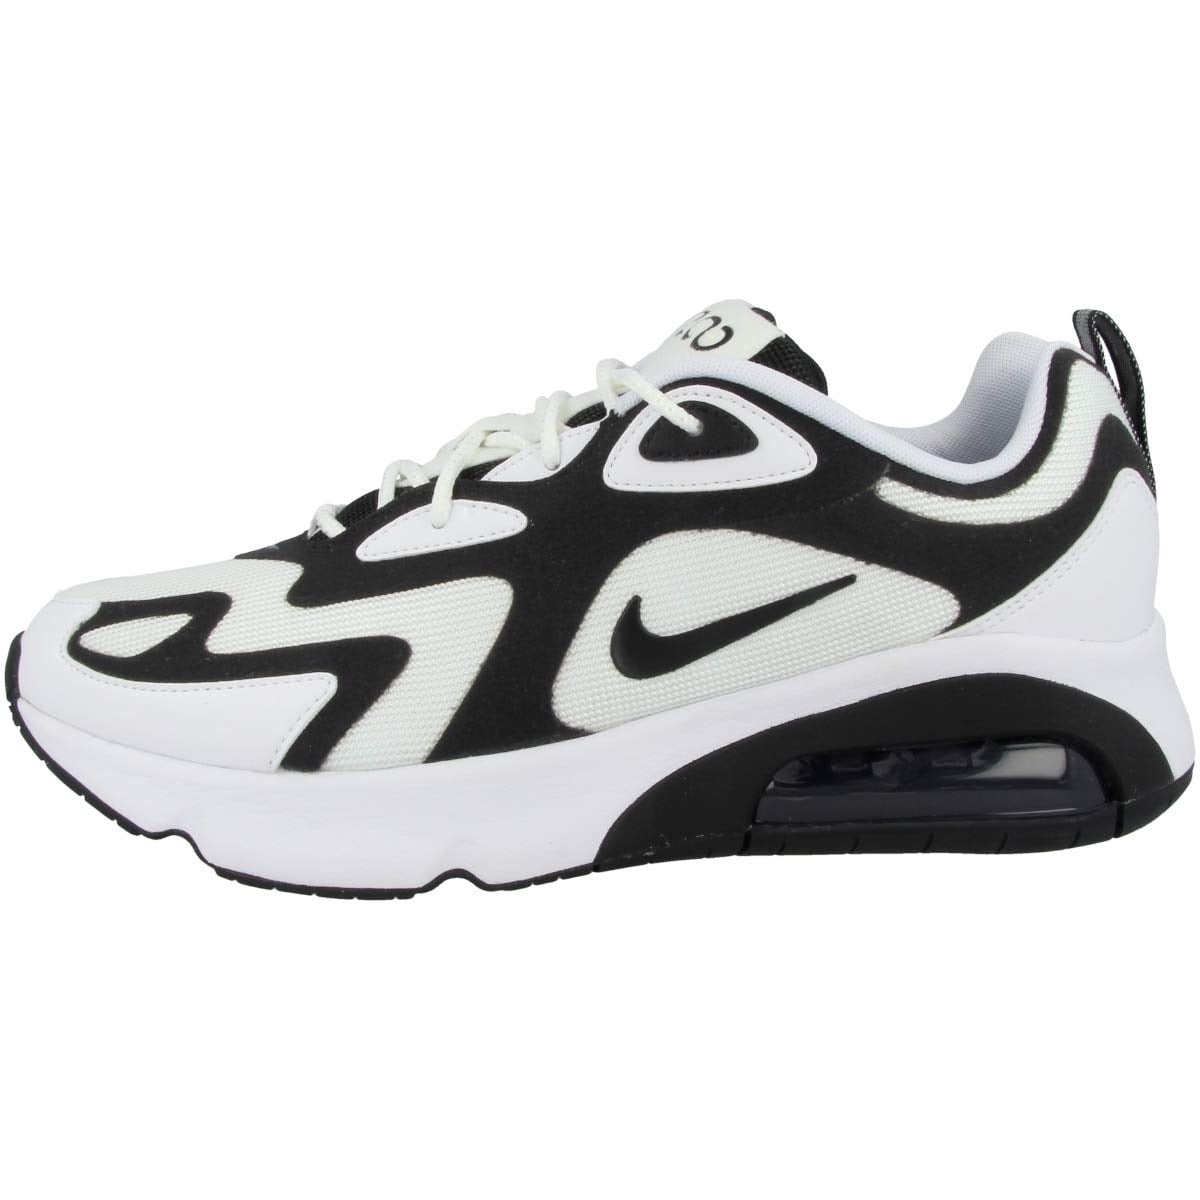 Keelholte zaad Versterken Nike Men's Air Max 200 Running Shoe, White/Black-Anthracite, 6 UK -  Walmart.com